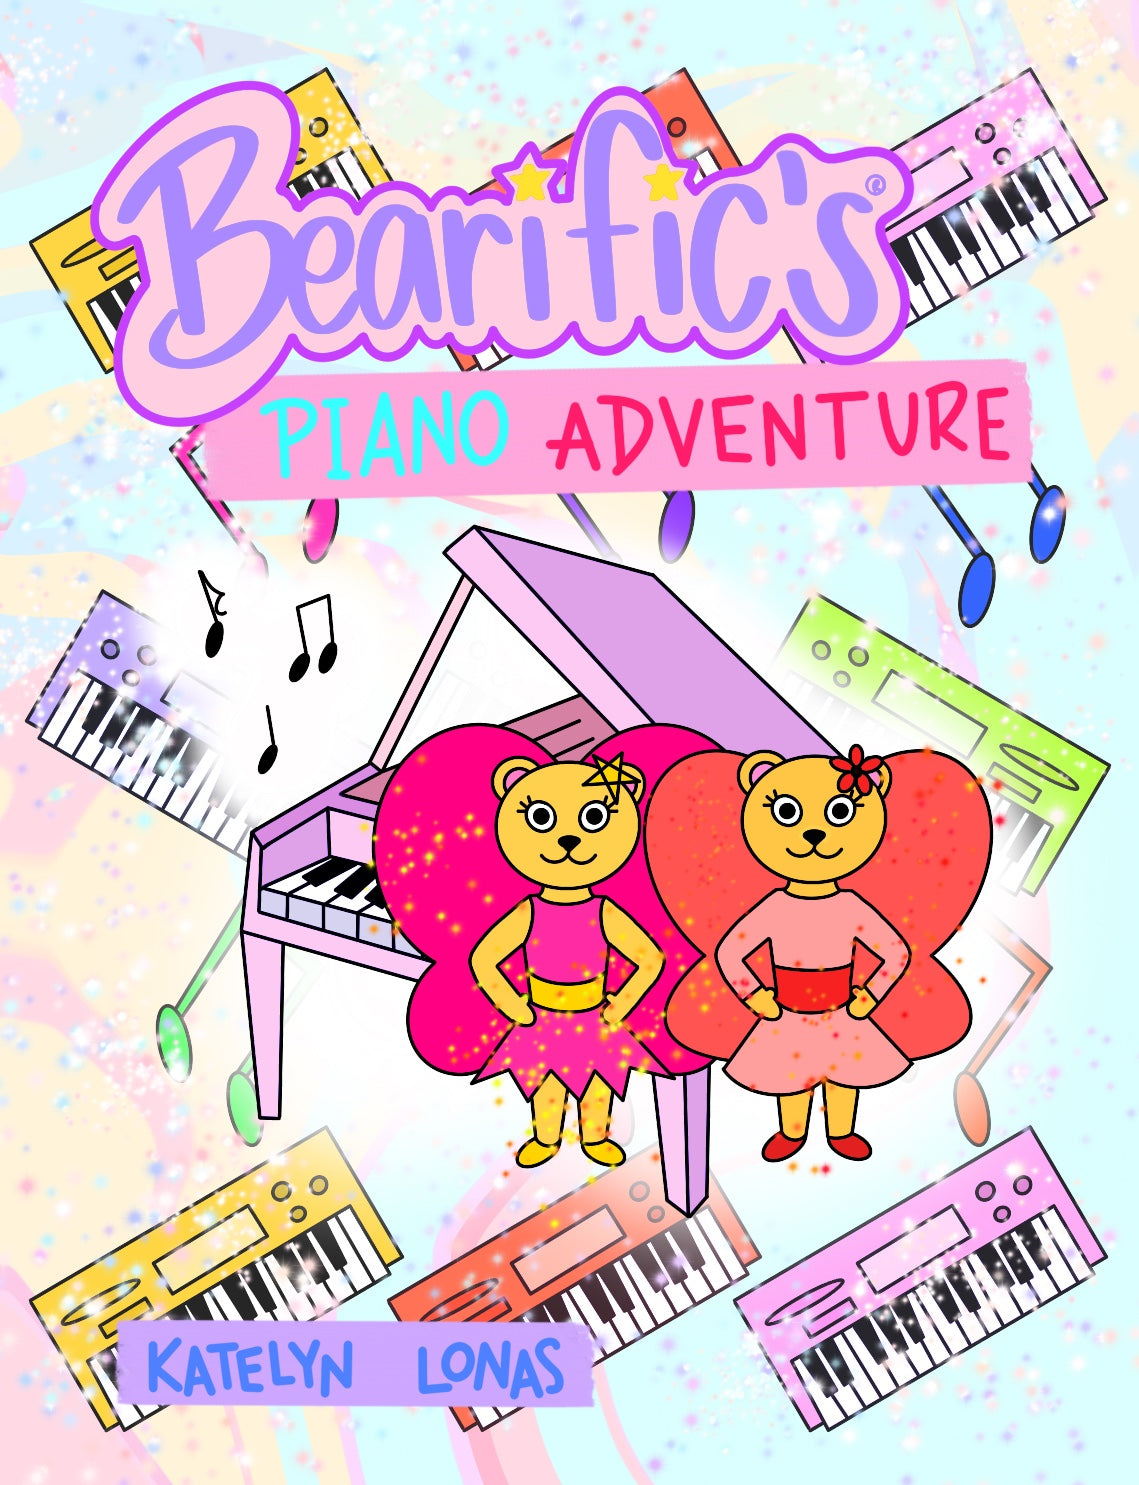 Bearific’s Piano Adventure